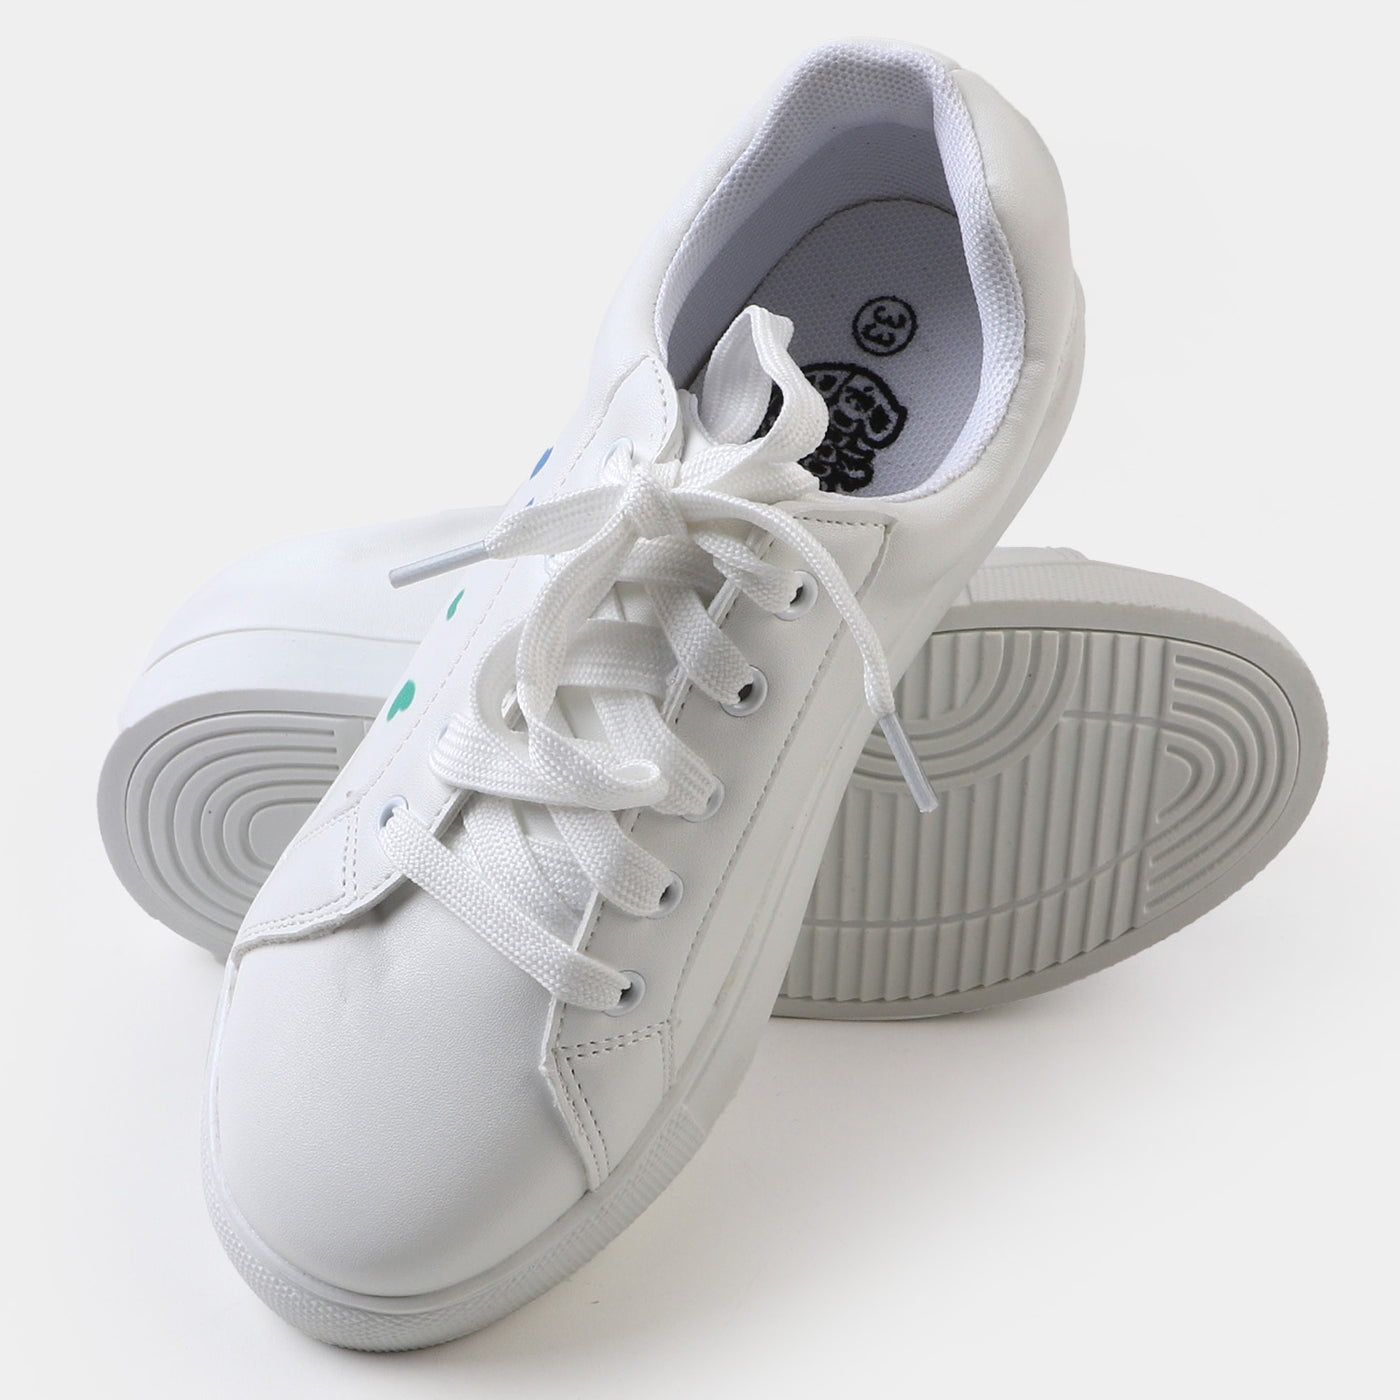 Girls Sneakers 202109-13 - White